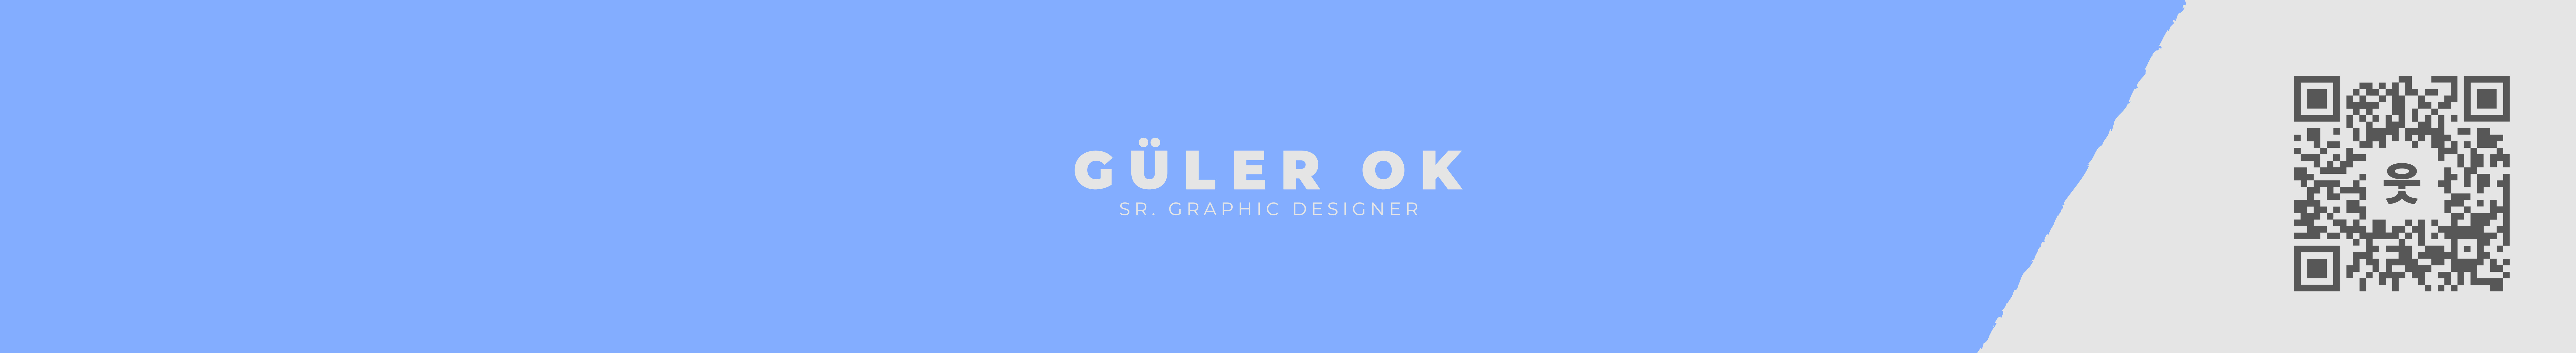 Güler Ok's profile banner